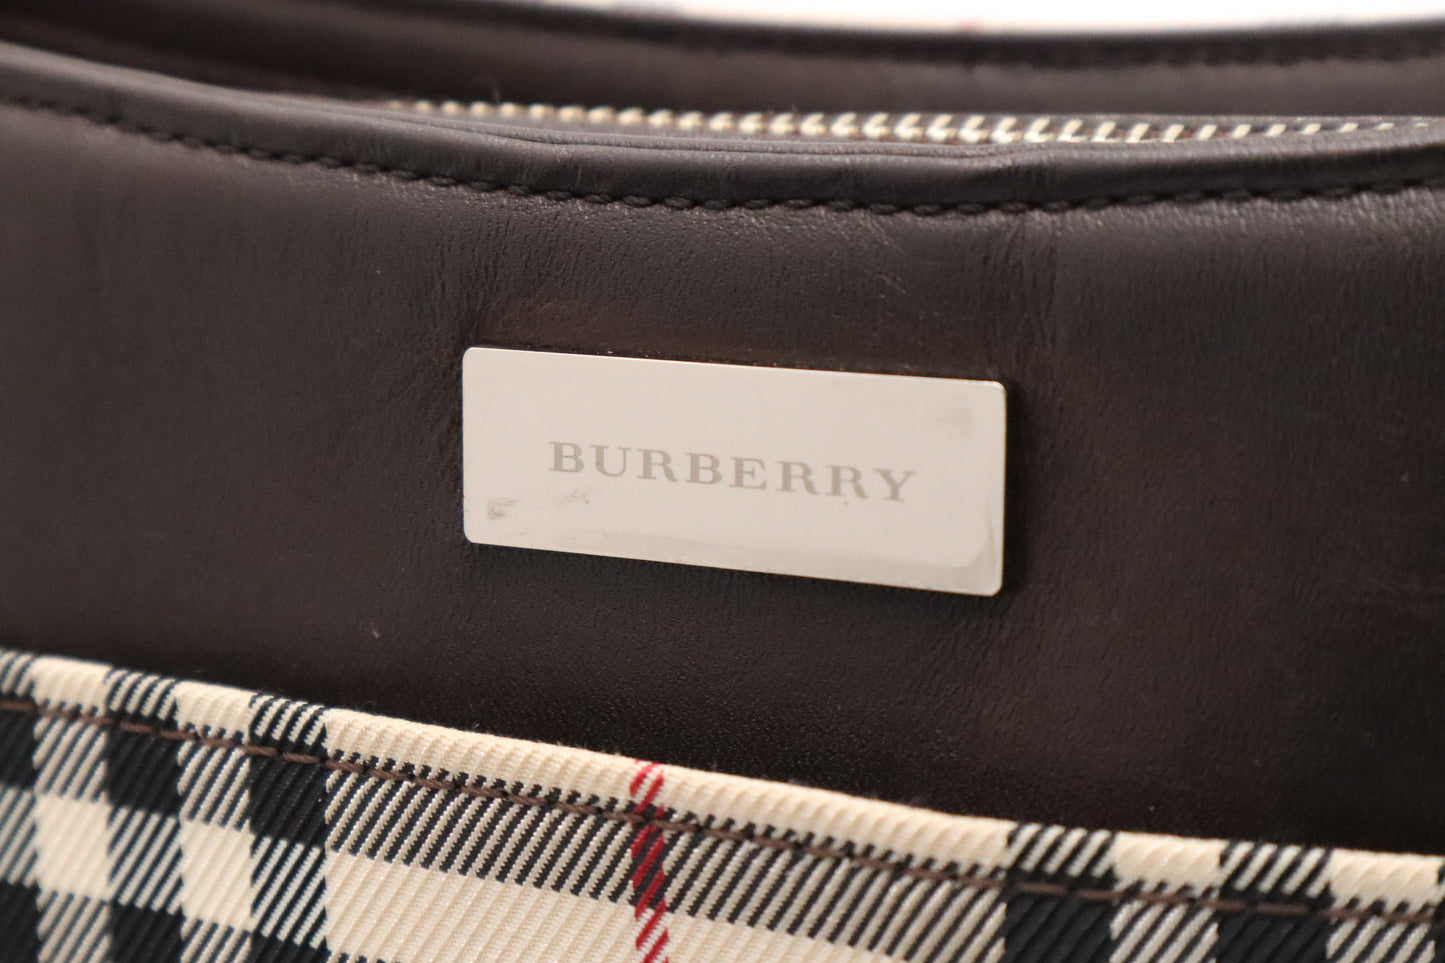 Burberry Crossbody Bag in Nova Check Canvas